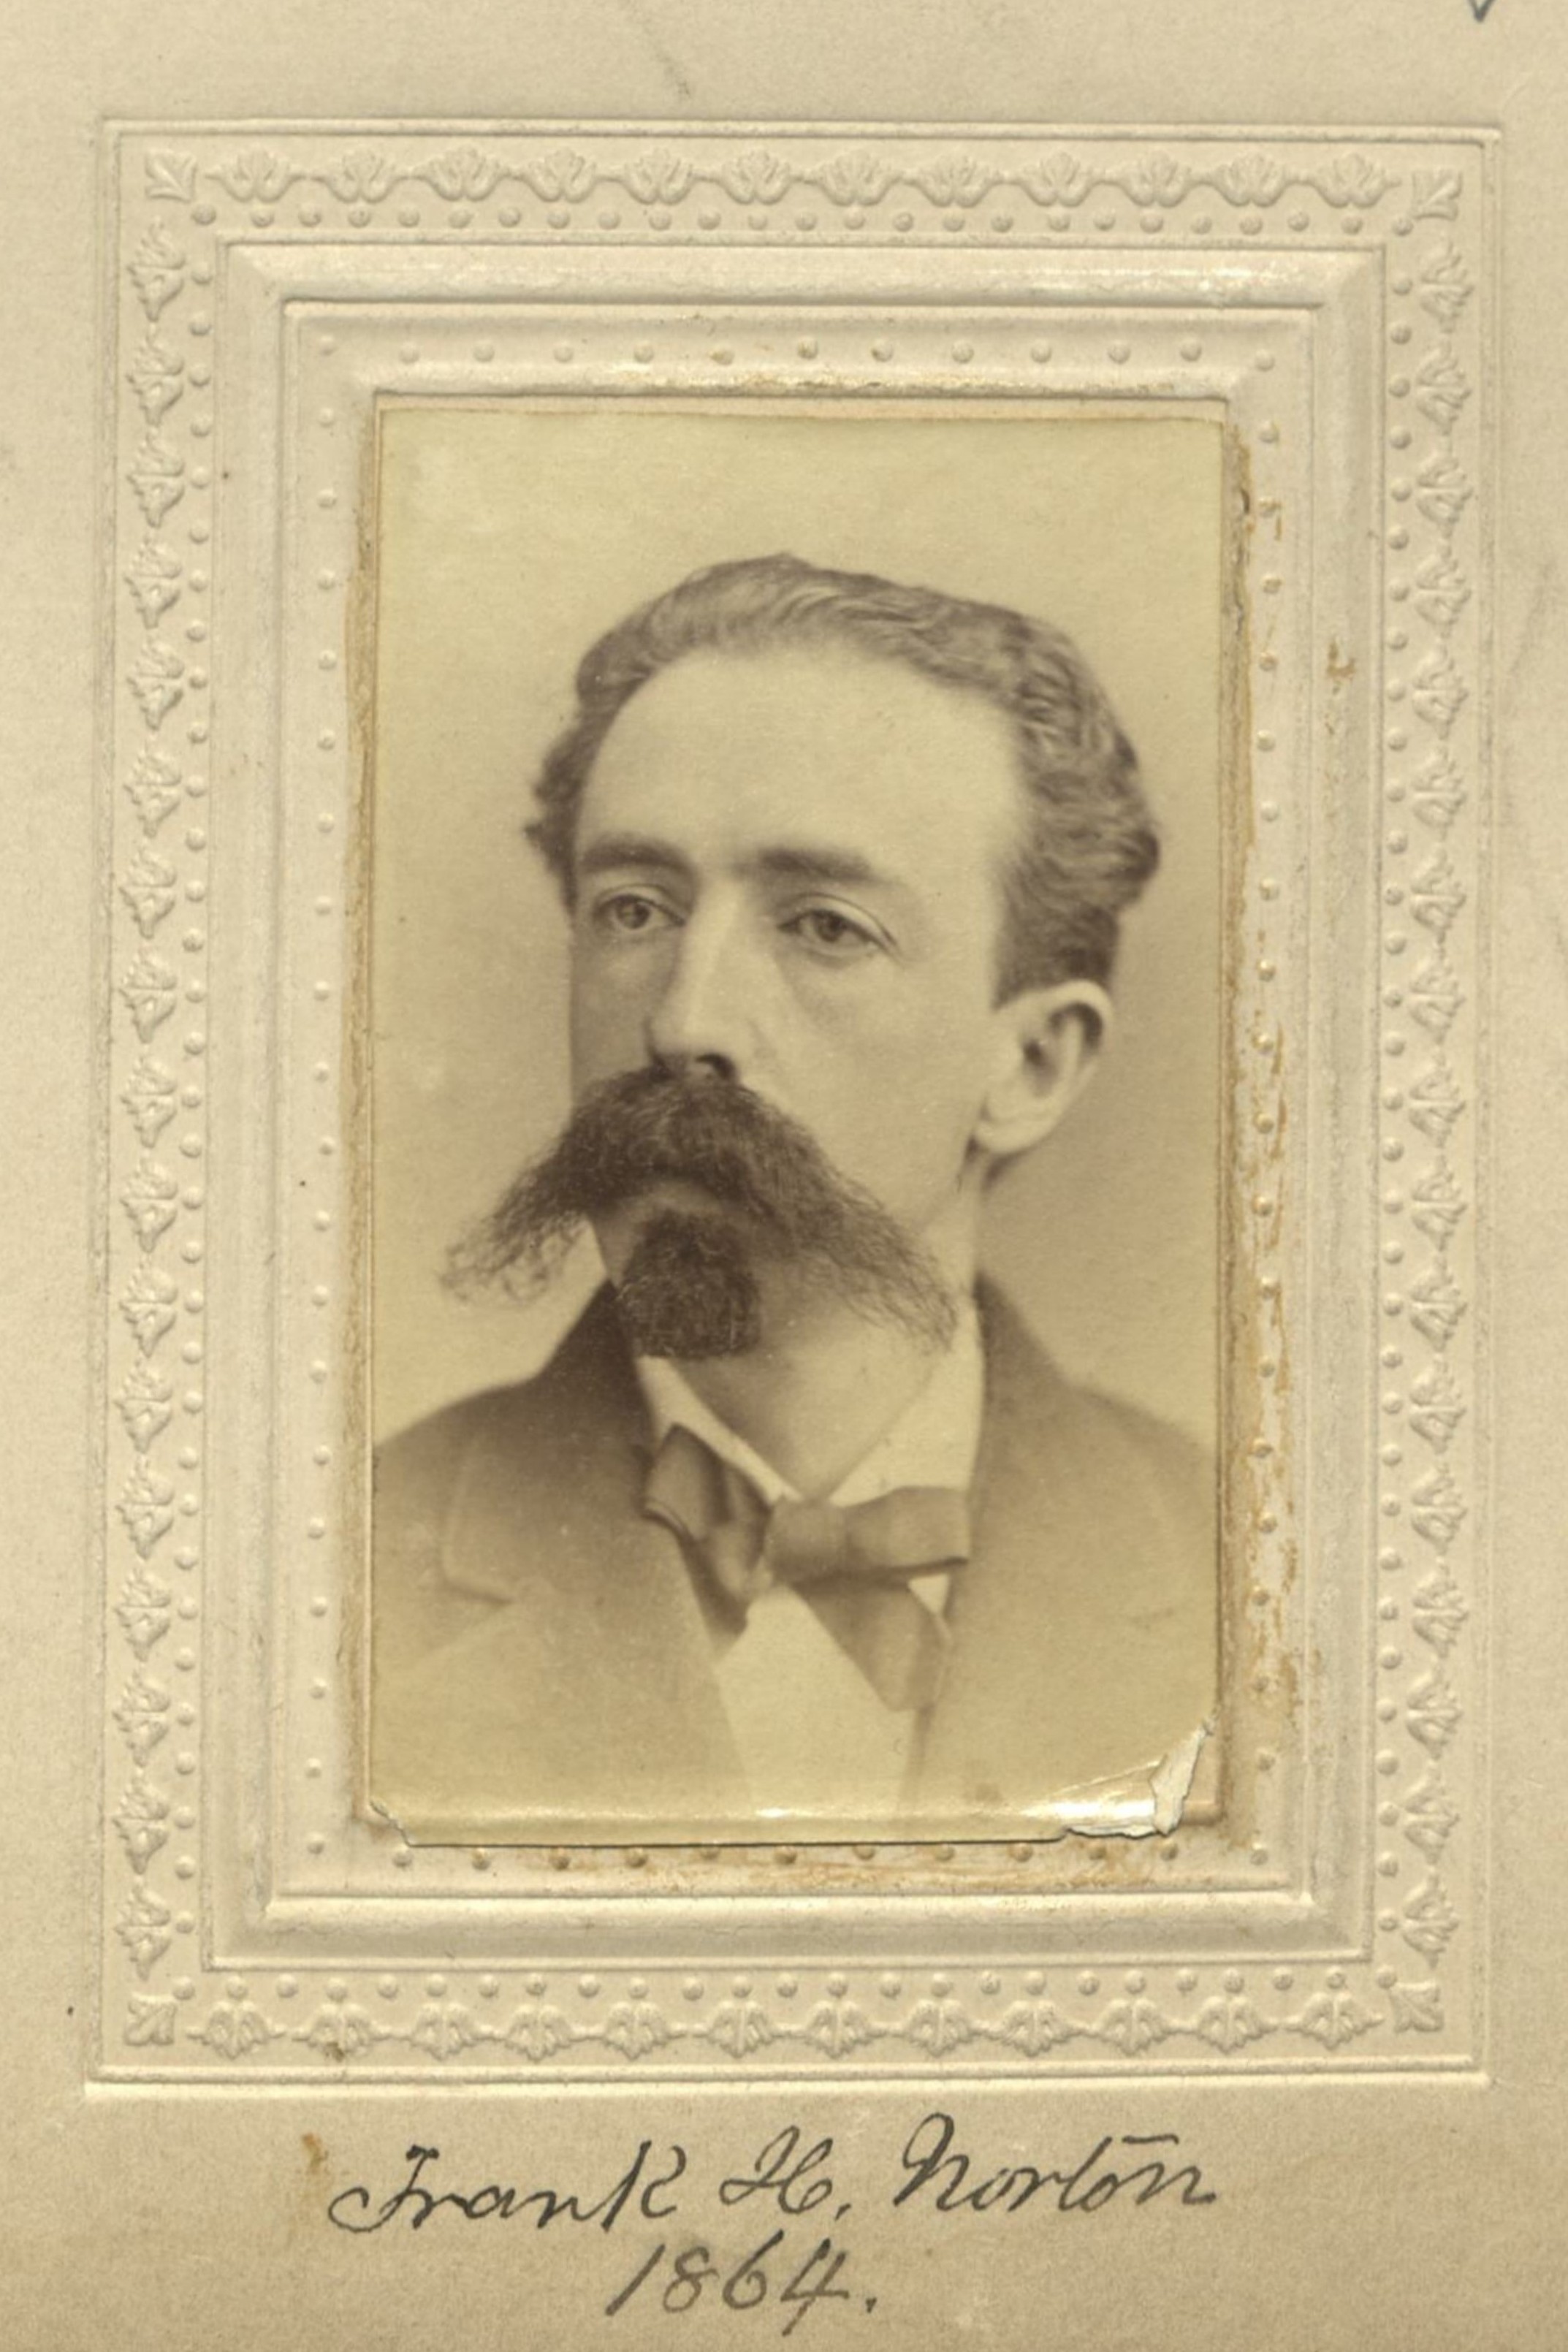 Member portrait of Frank H. Norton